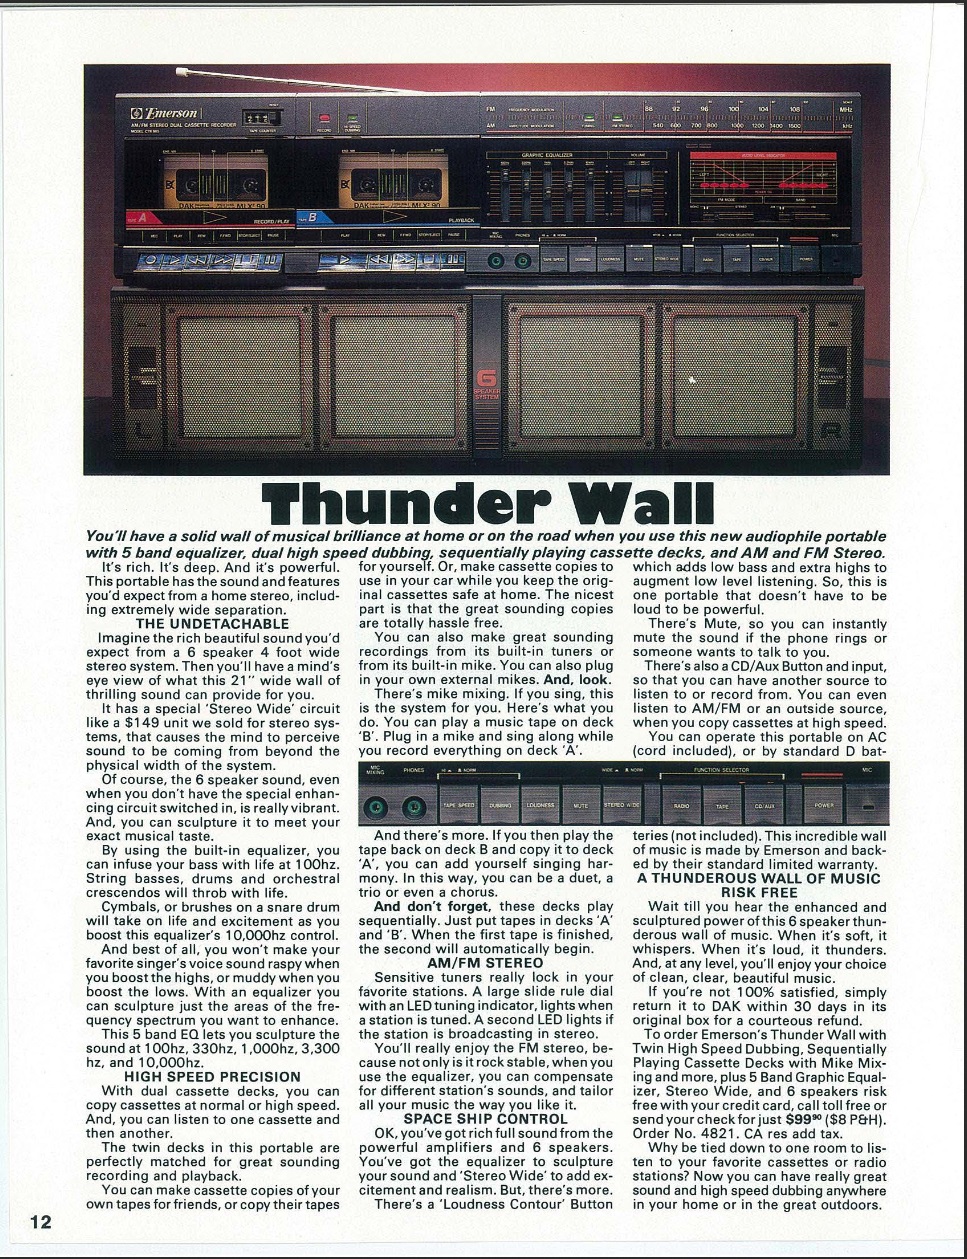 Emerson Thunder Wall Boombox.jpg